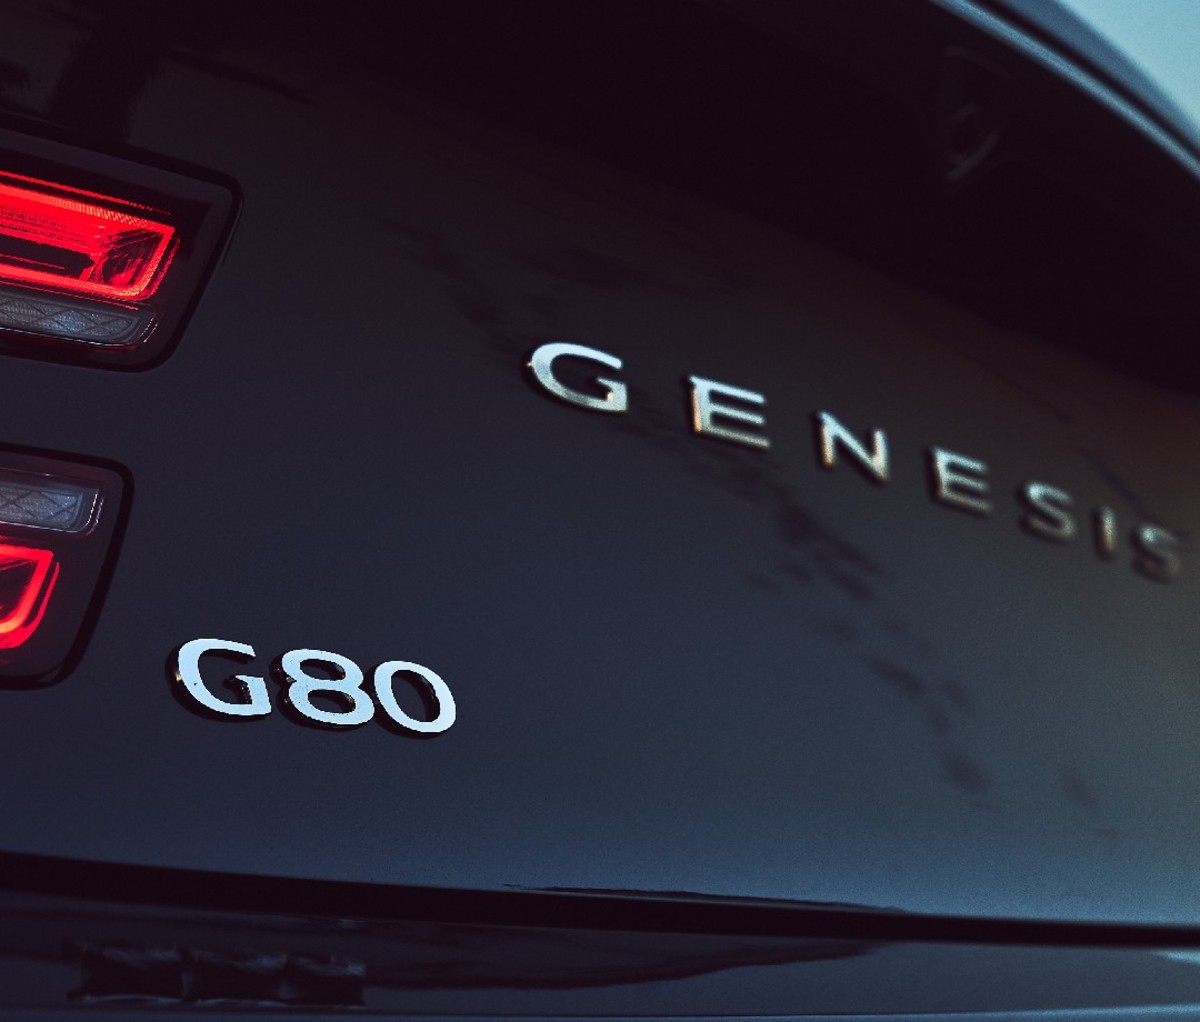 Genesis G80 insignia